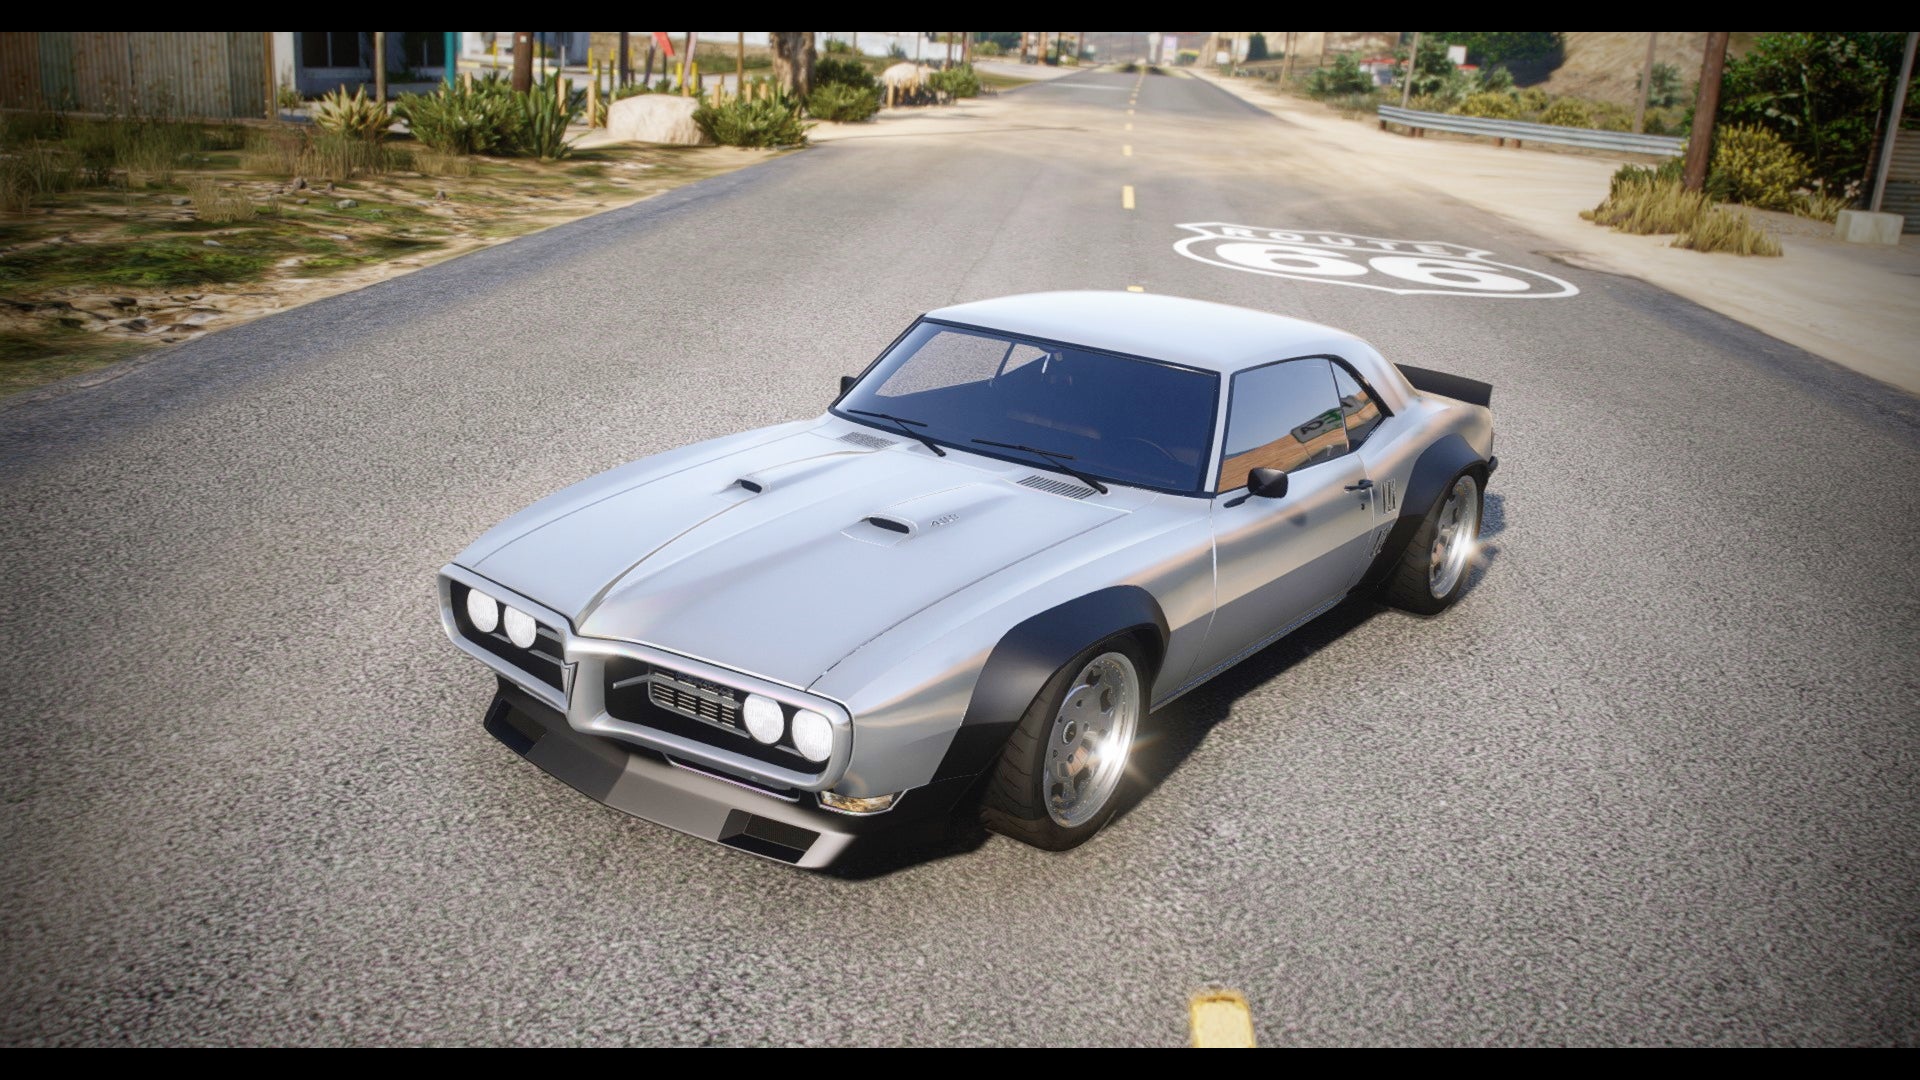 1968 Pontiac Firebird Mod for GTA V Looks Spot On, Test Drive Video Is  Thrilling - autoevolution